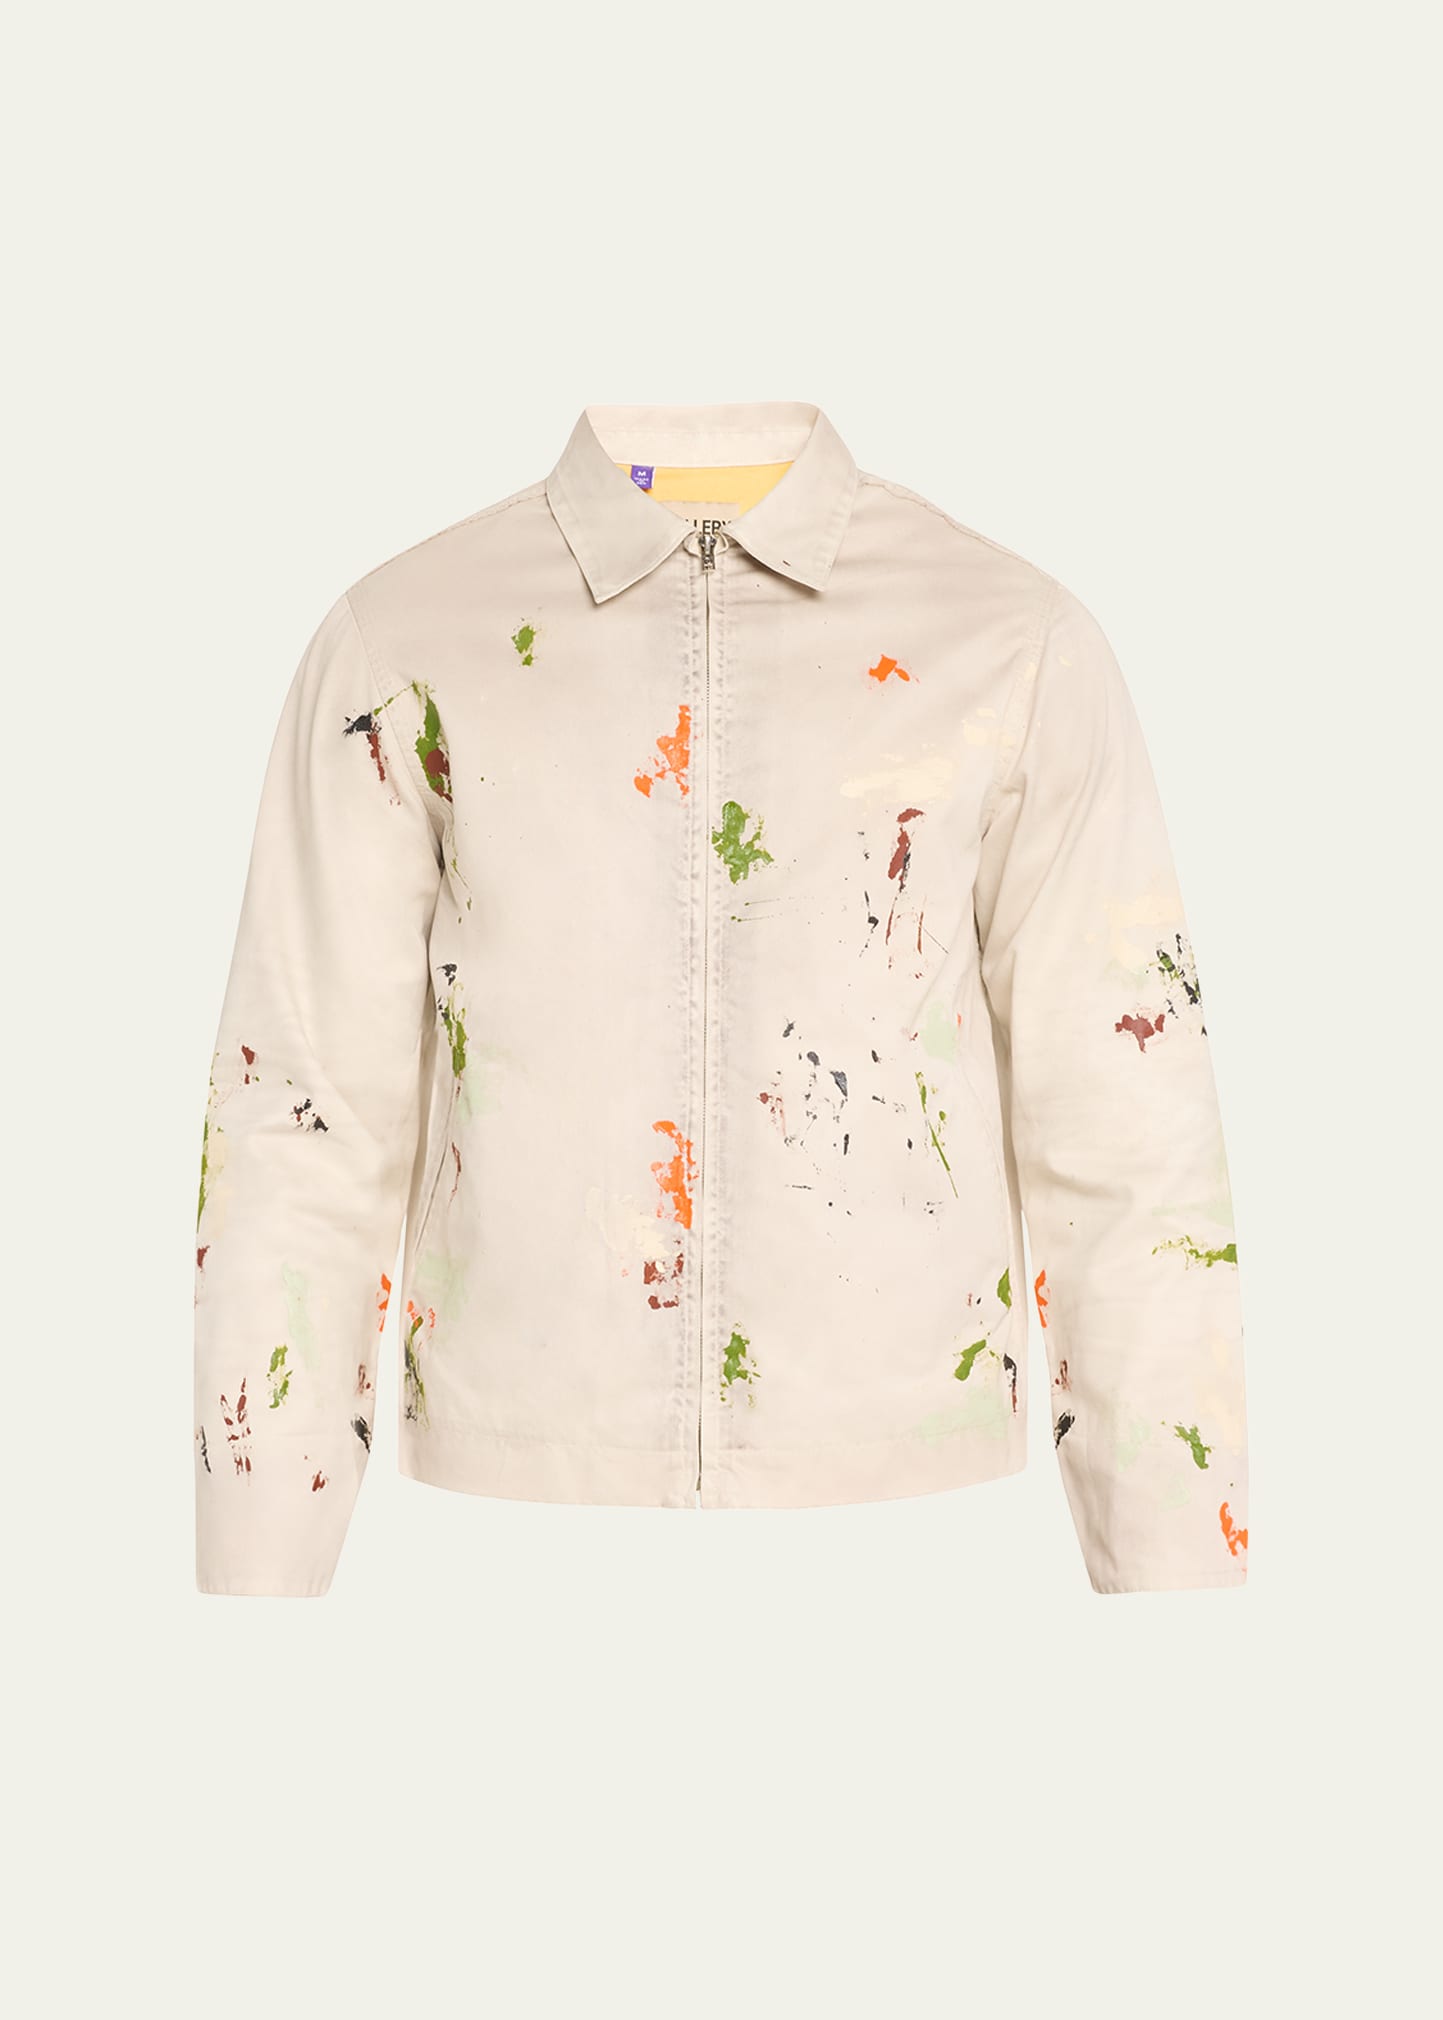 Gallery Department Men's Montecito Paint-splatter Jacket In Antique White